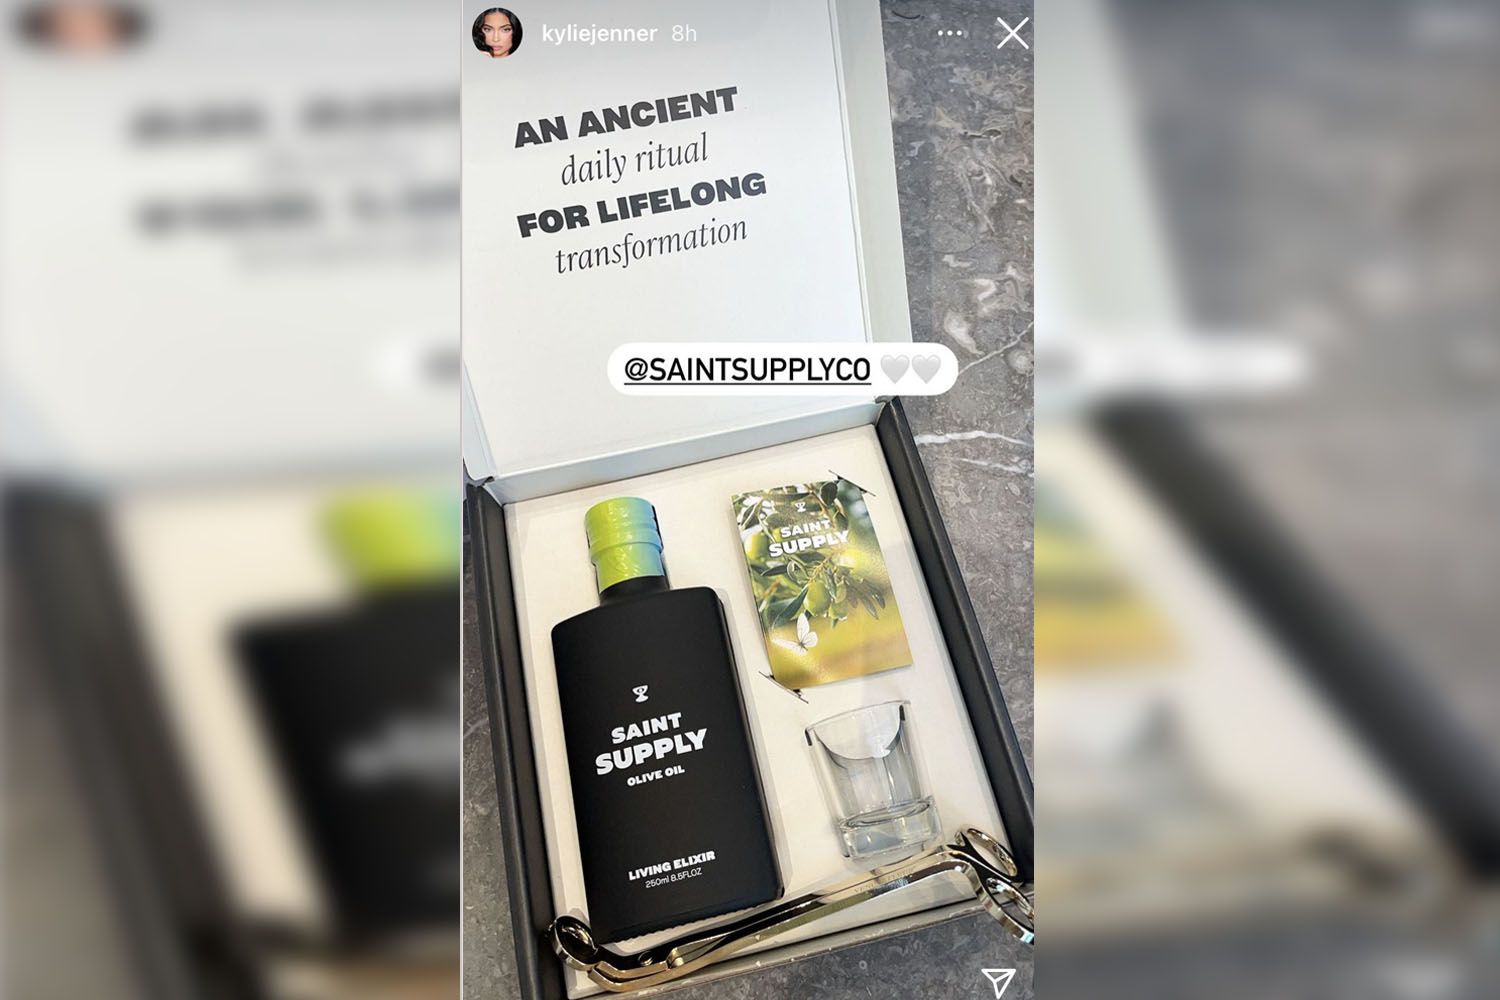 Un 'stories' de Kylie Jenner que muestra el kit completo del chupito aceite de oliva / Instagram Kylie Jenner